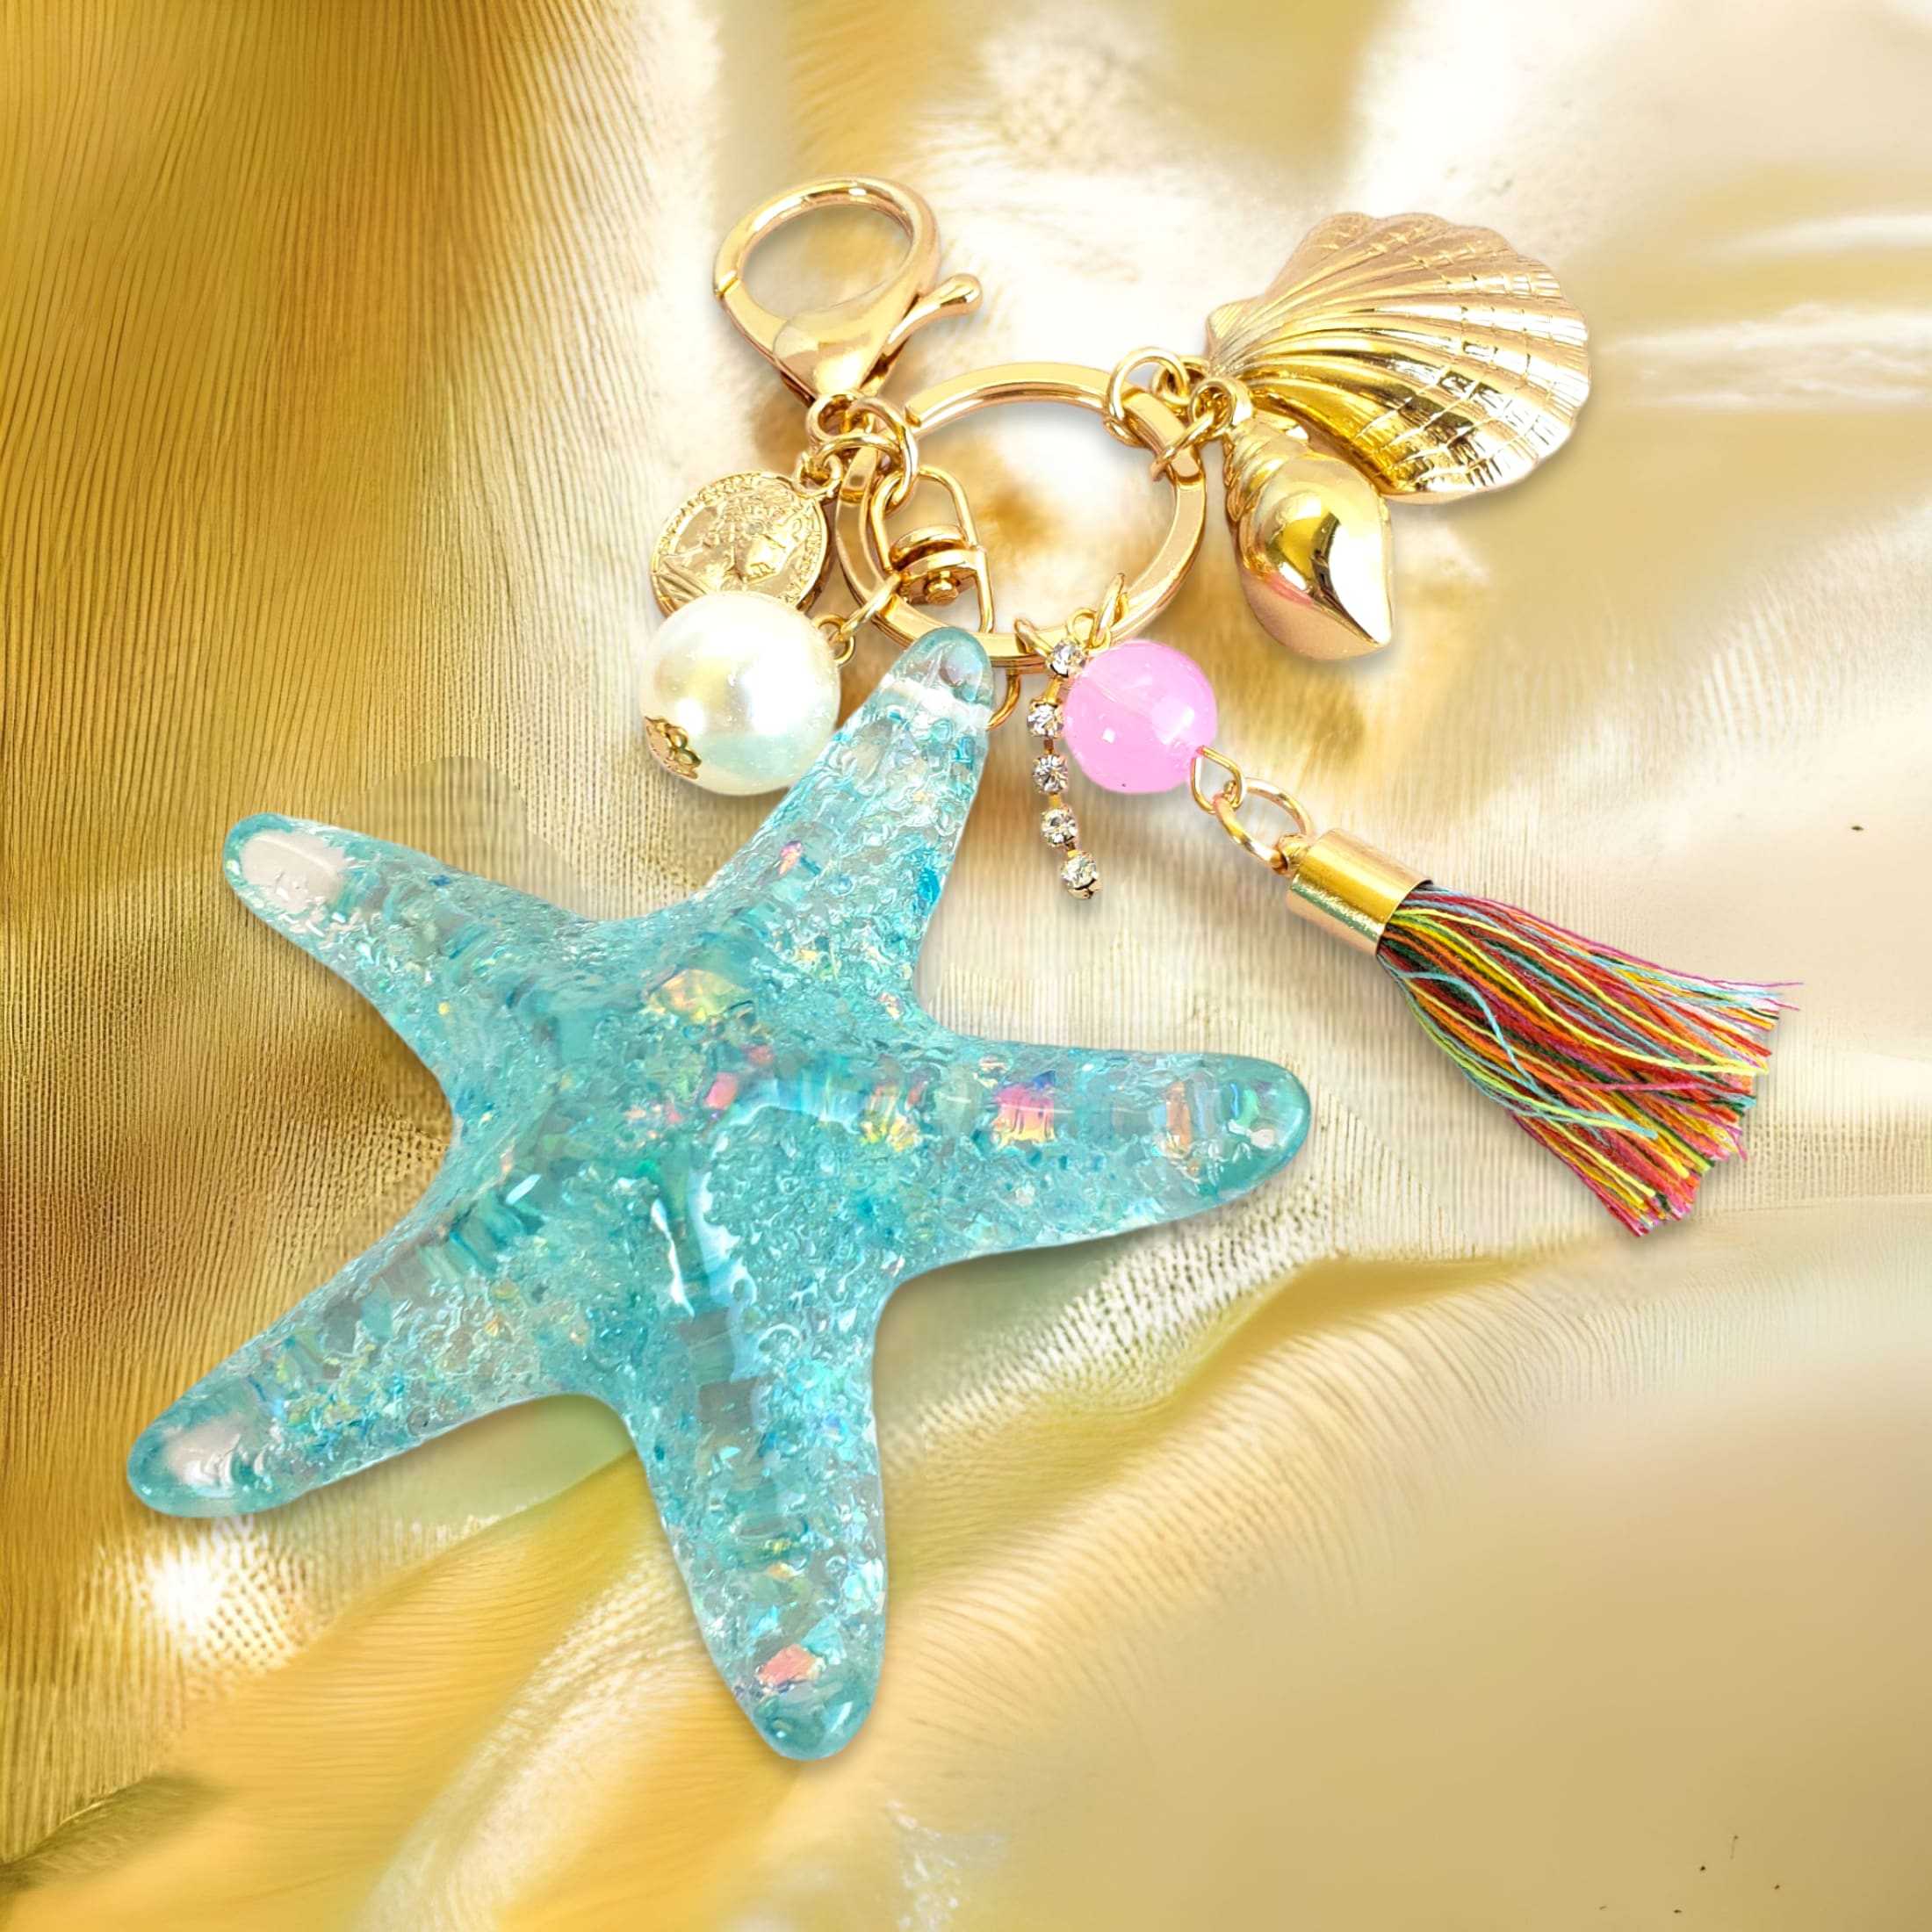 Accessories Key Starfish, Starfish Shell Key Chain